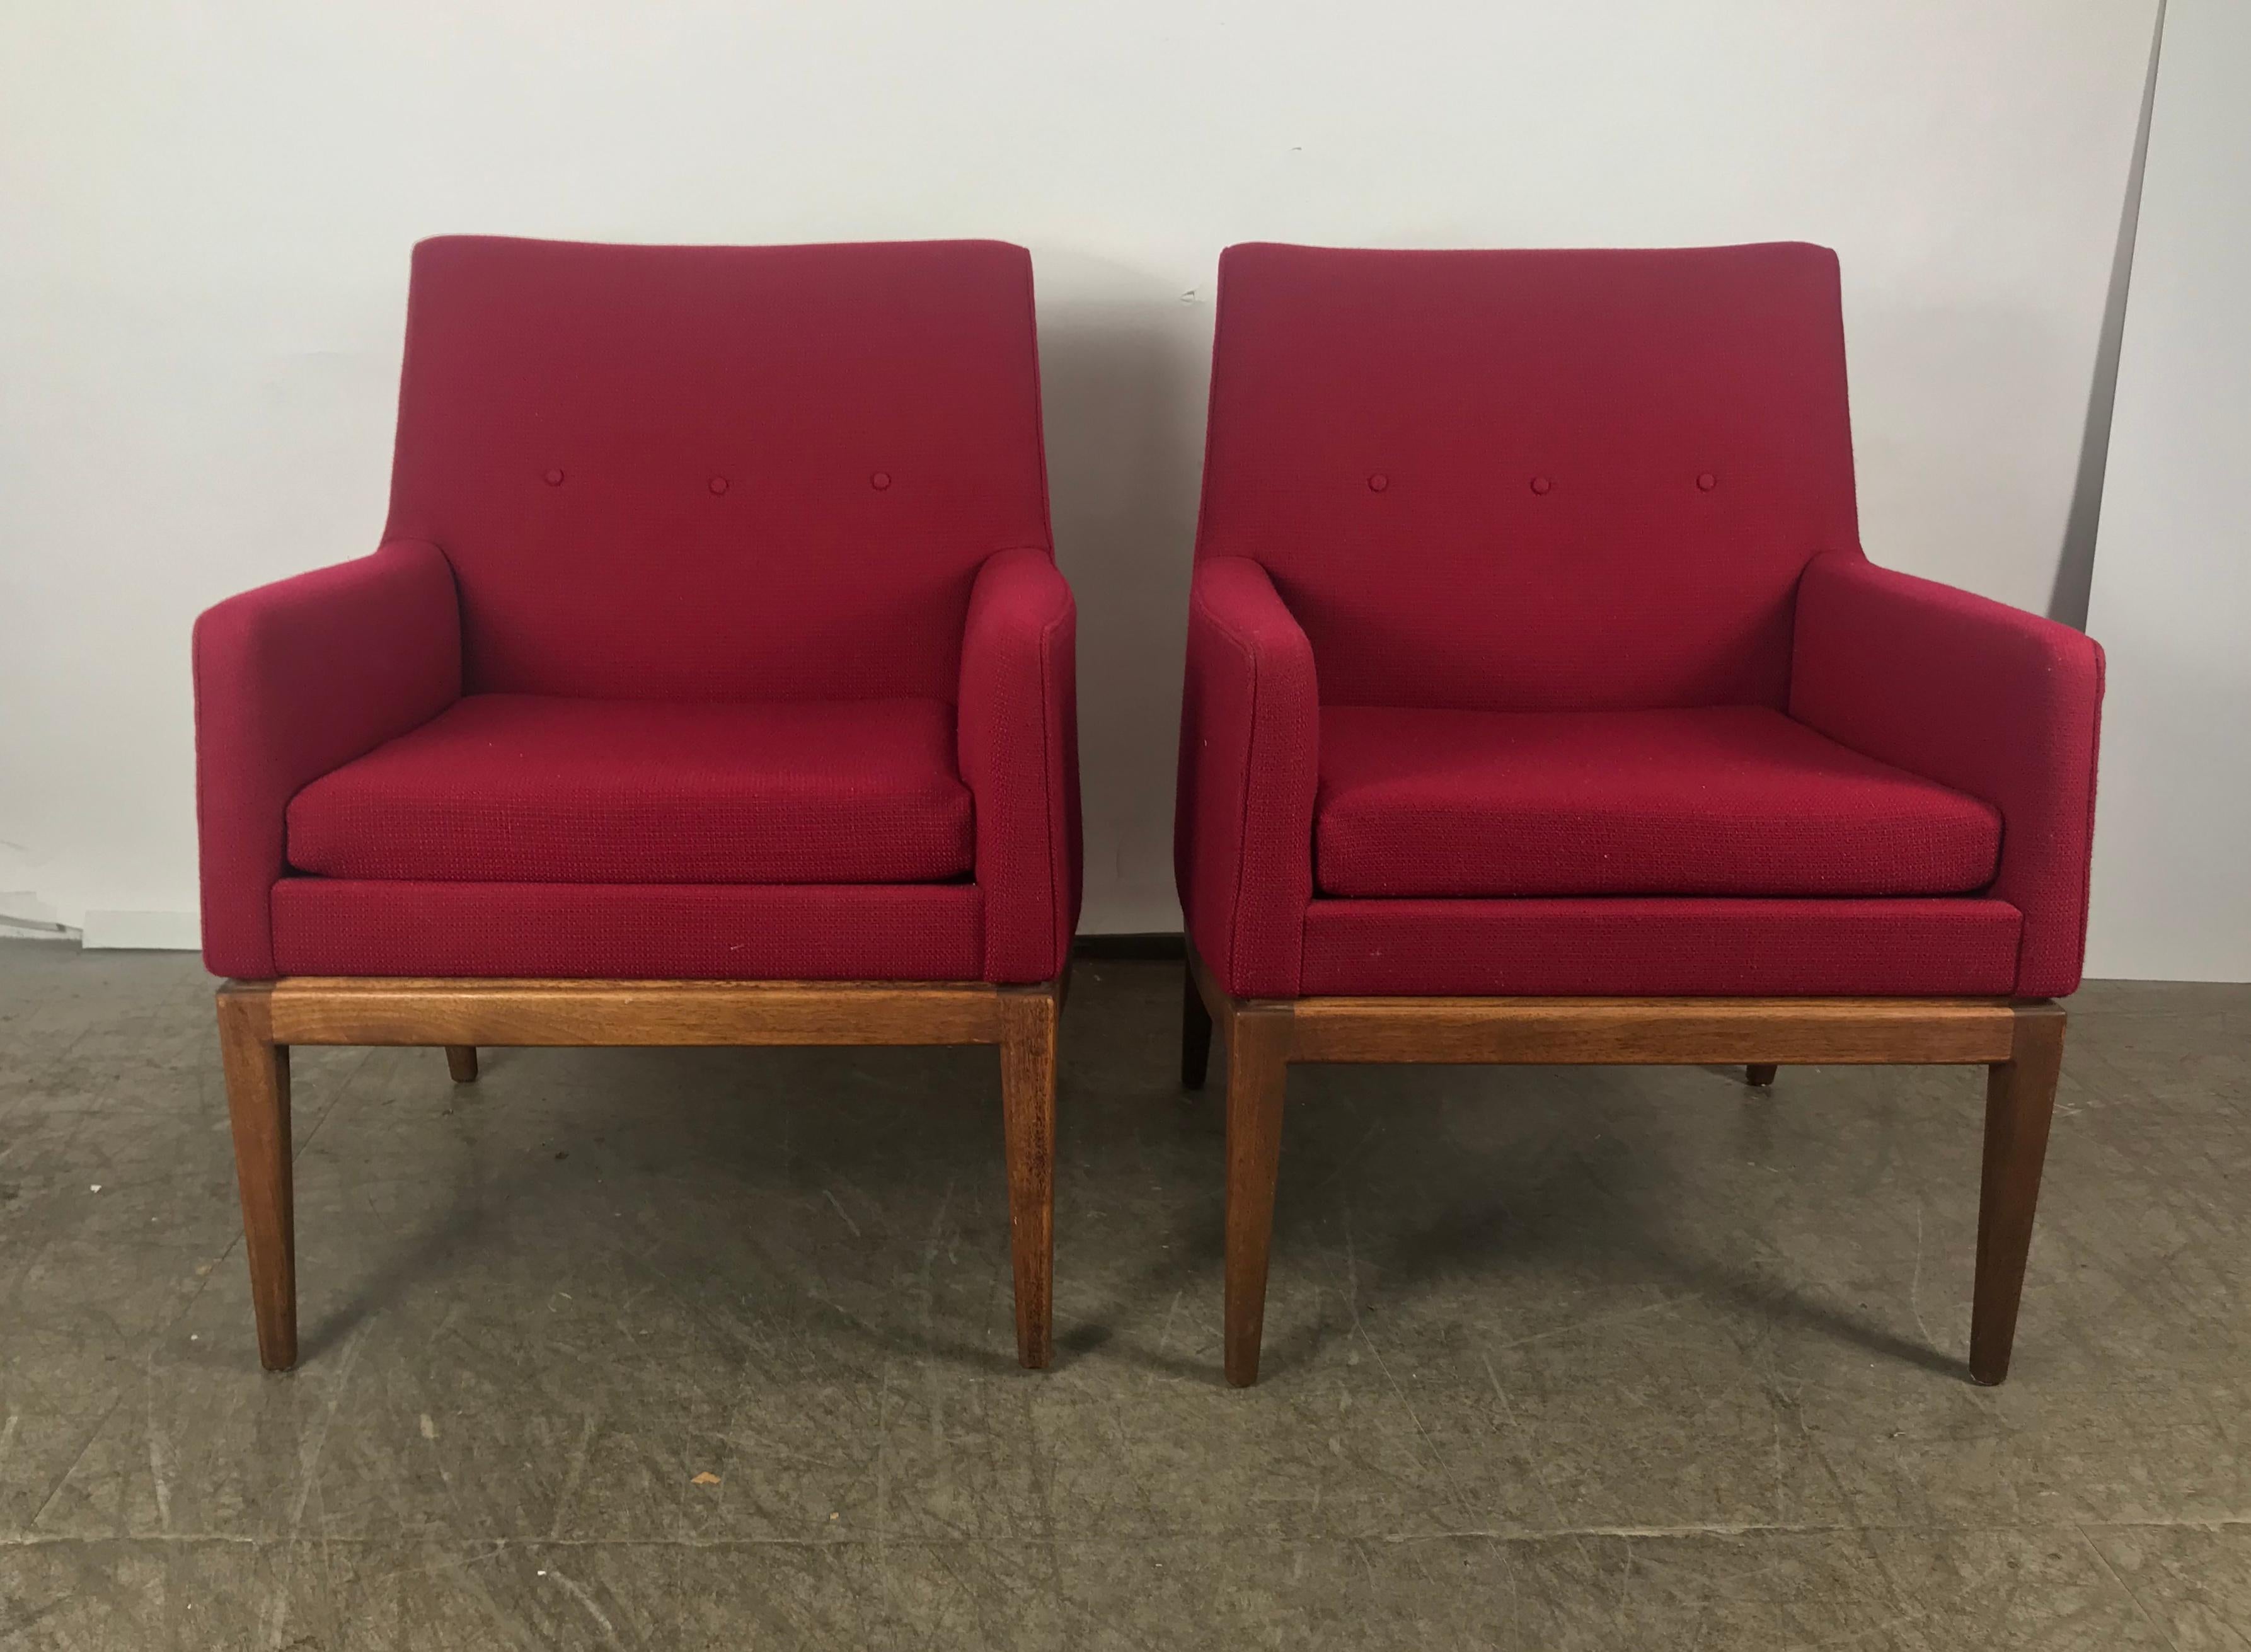 American Classic Modernist Lounge Chairs designed by Jens Risom, Jens Risom Design Inc.